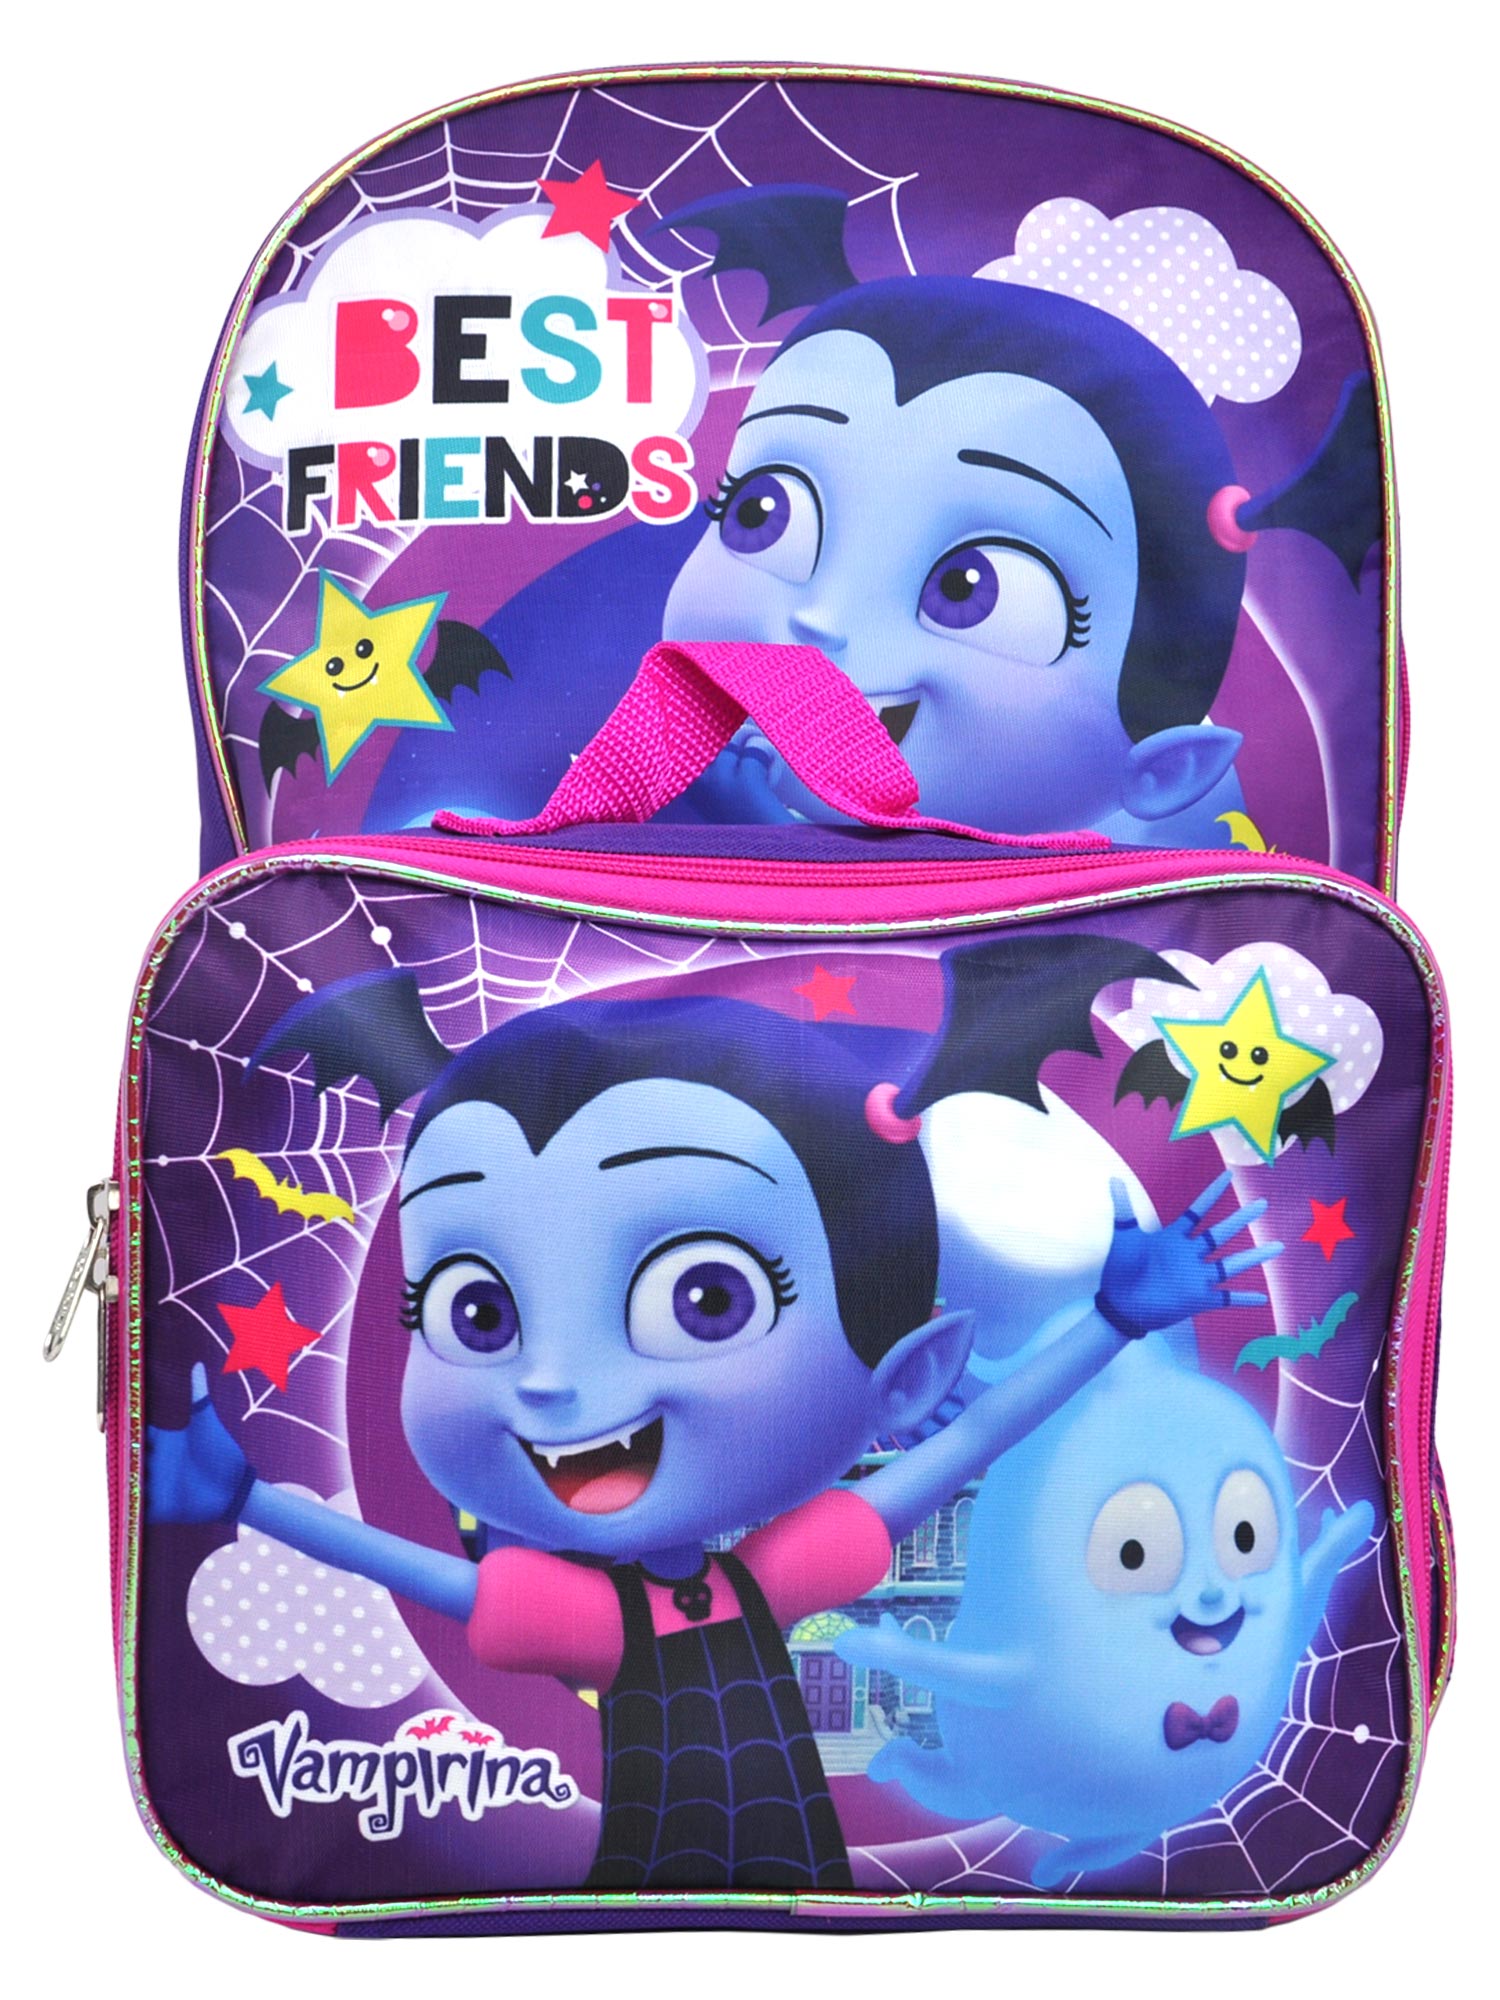 Girls Vampirina Best Friends Backpack 16" w/ Detachable Lunch Bag Purple - image 2 of 6